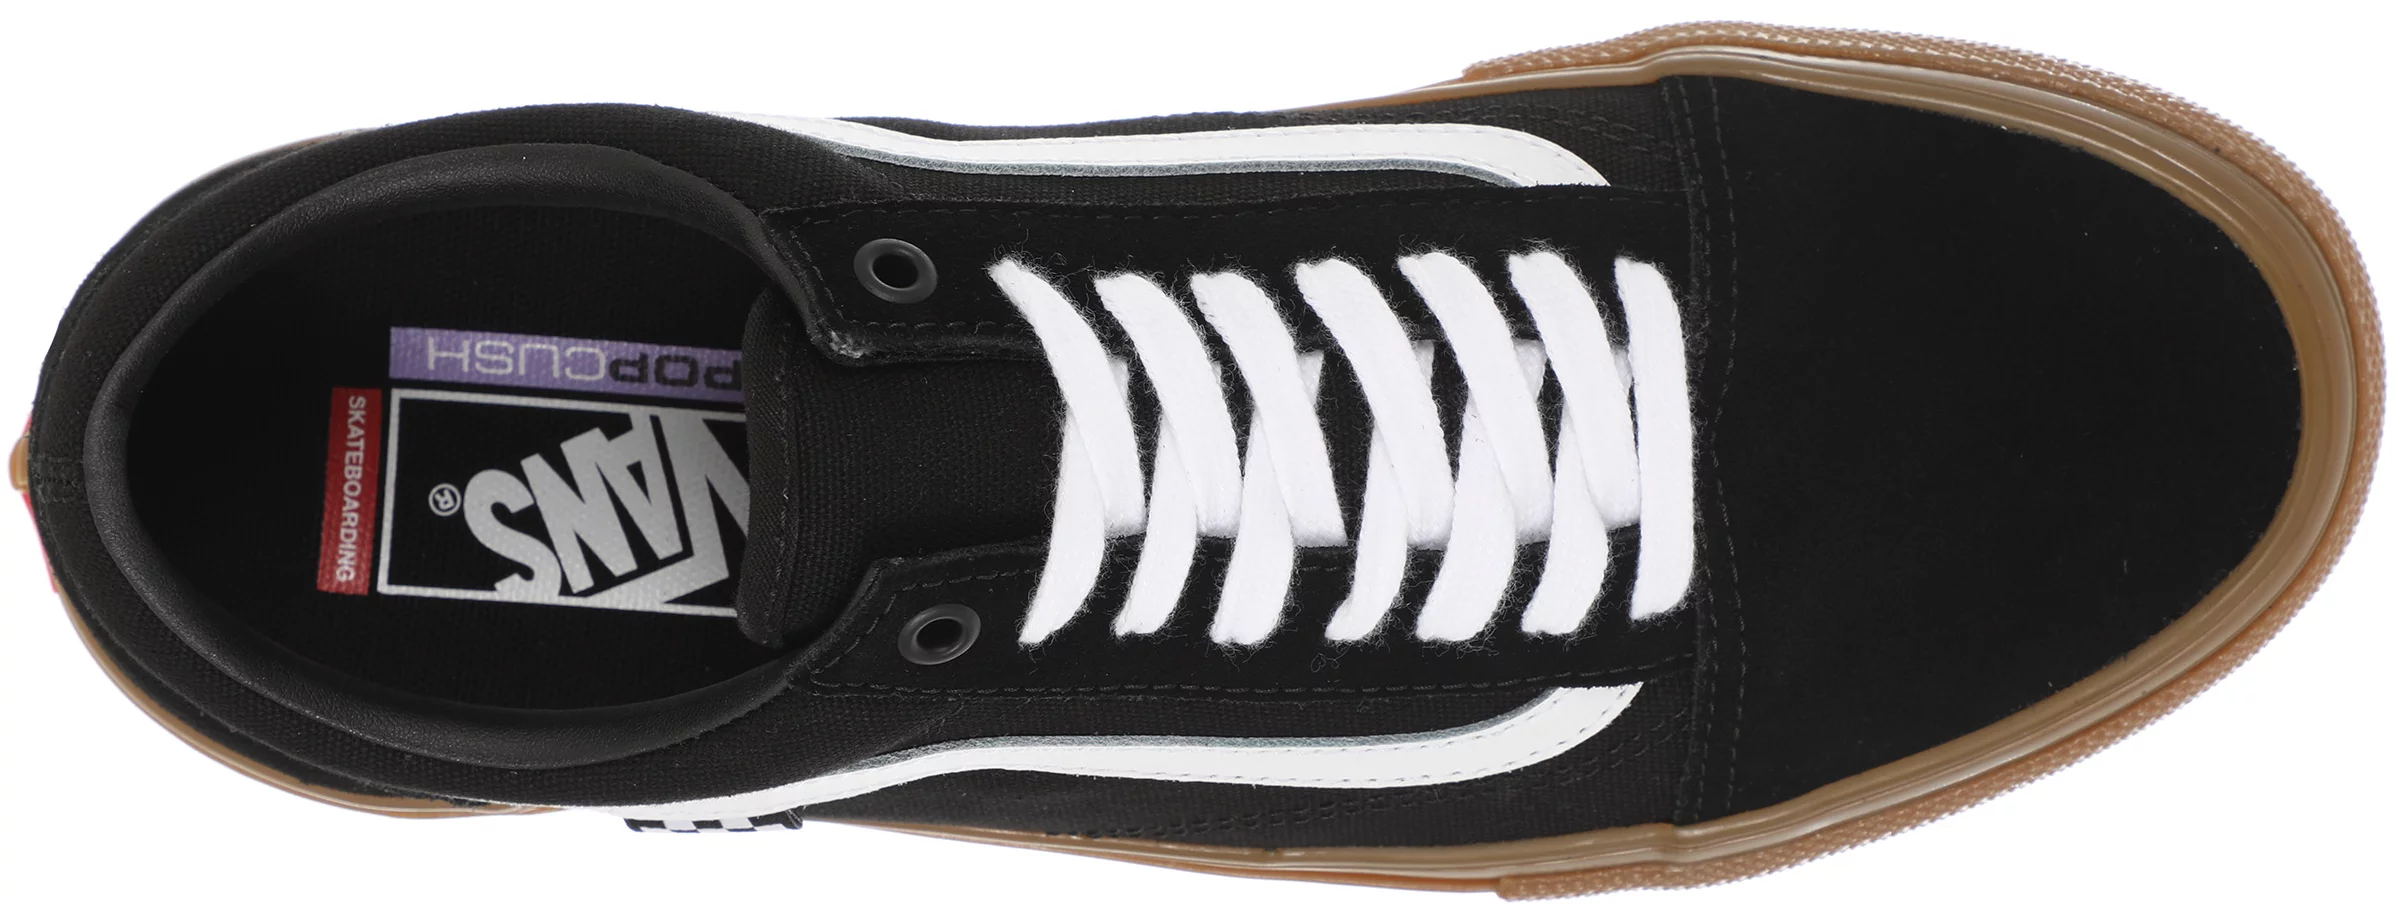 Vans Skate Old Skool Shoes - black/gum - Free Shipping | Tactics